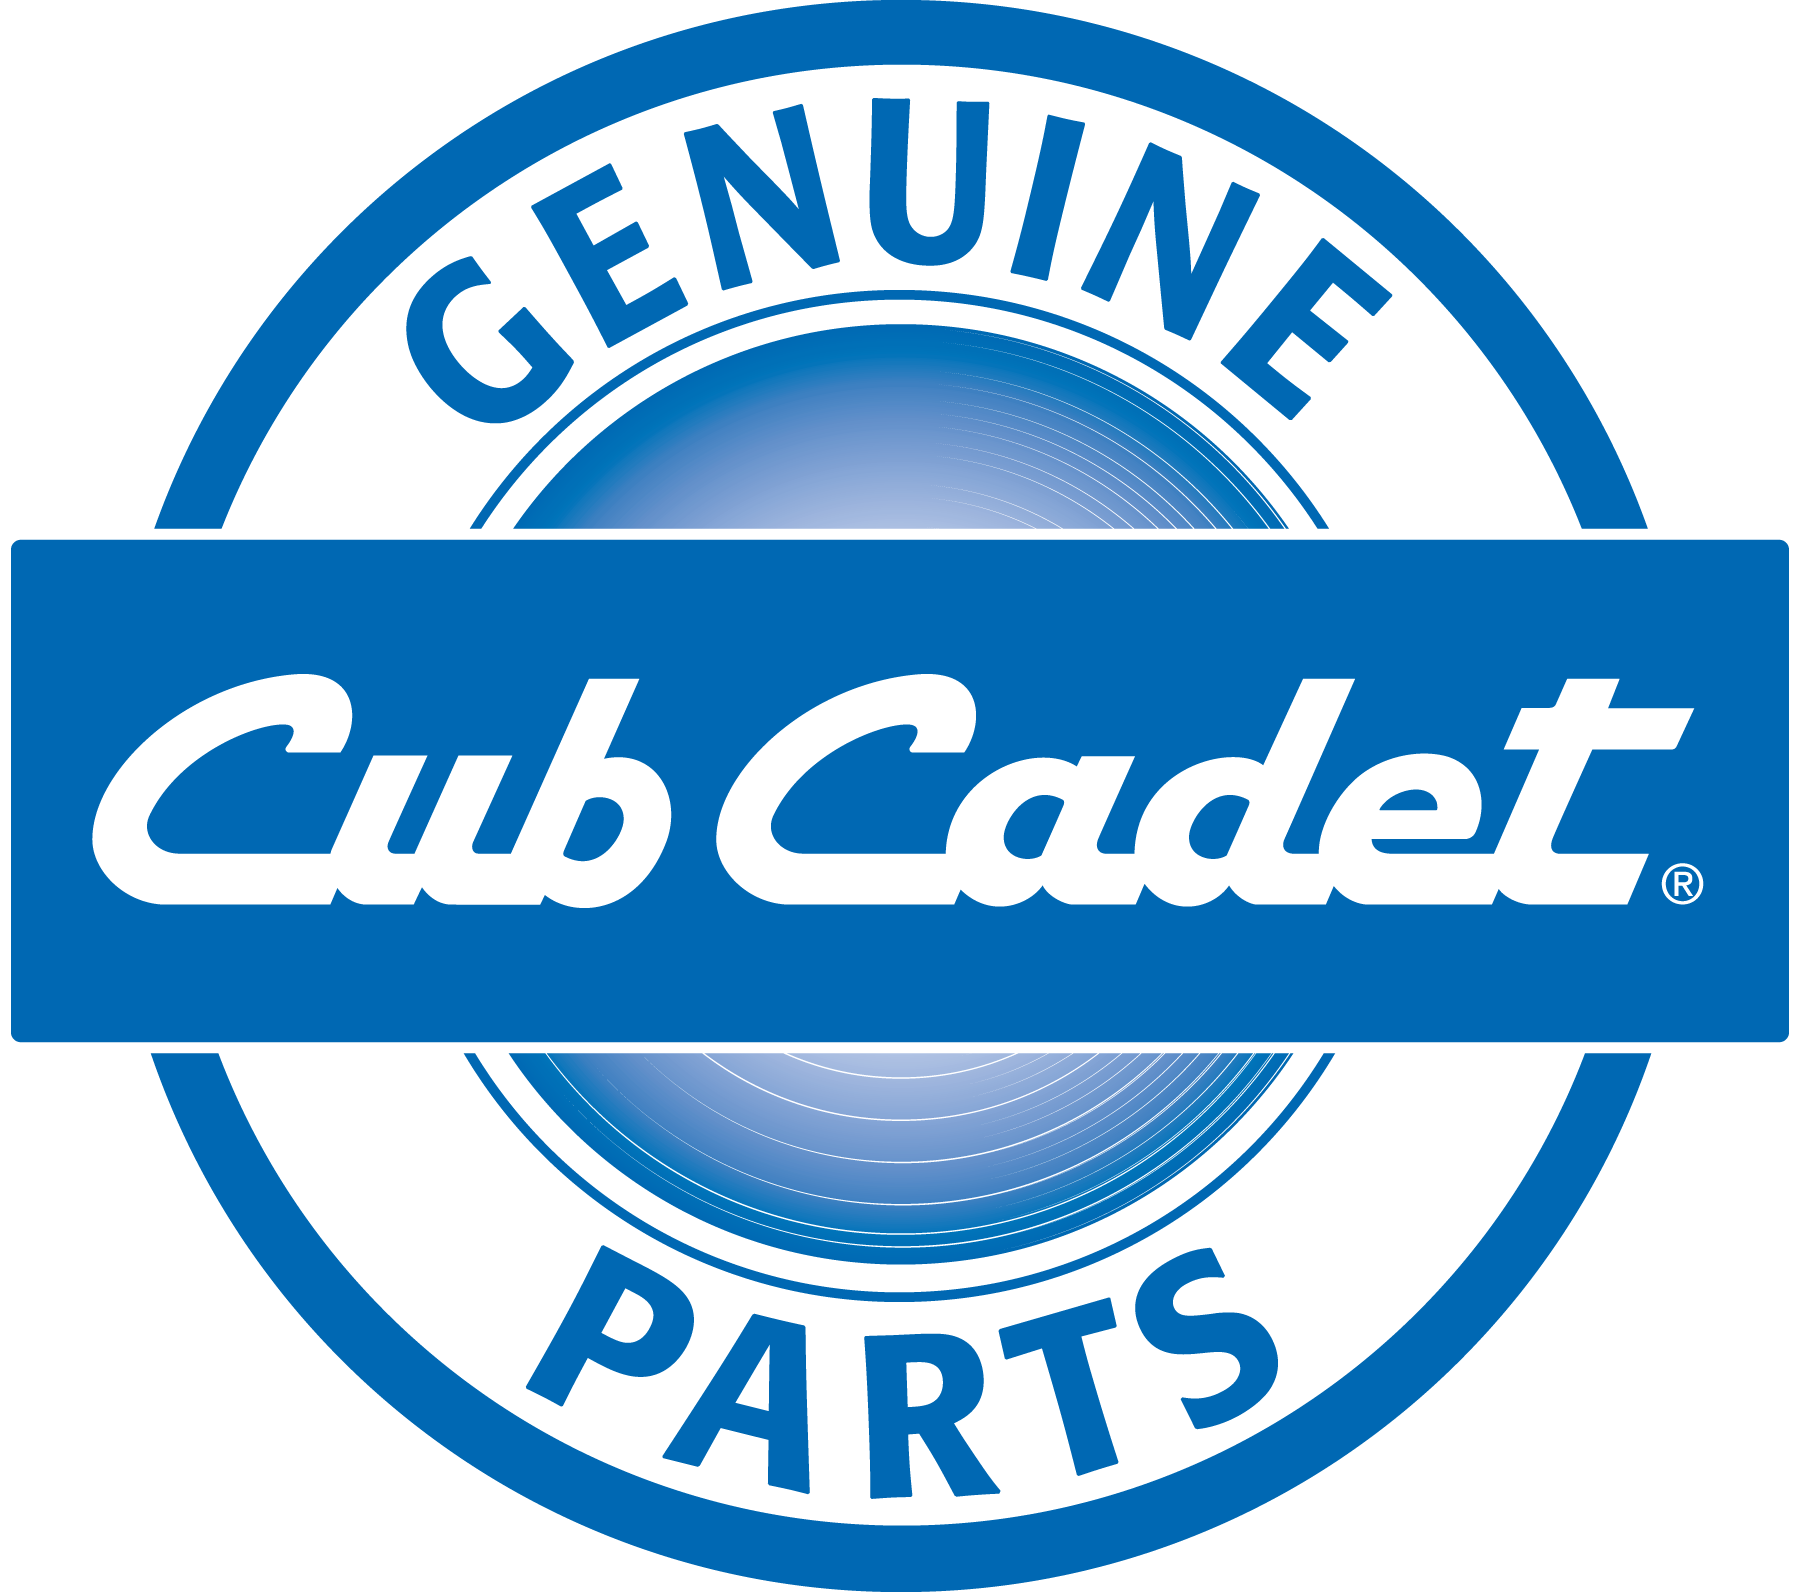 Genuine Parts Logo